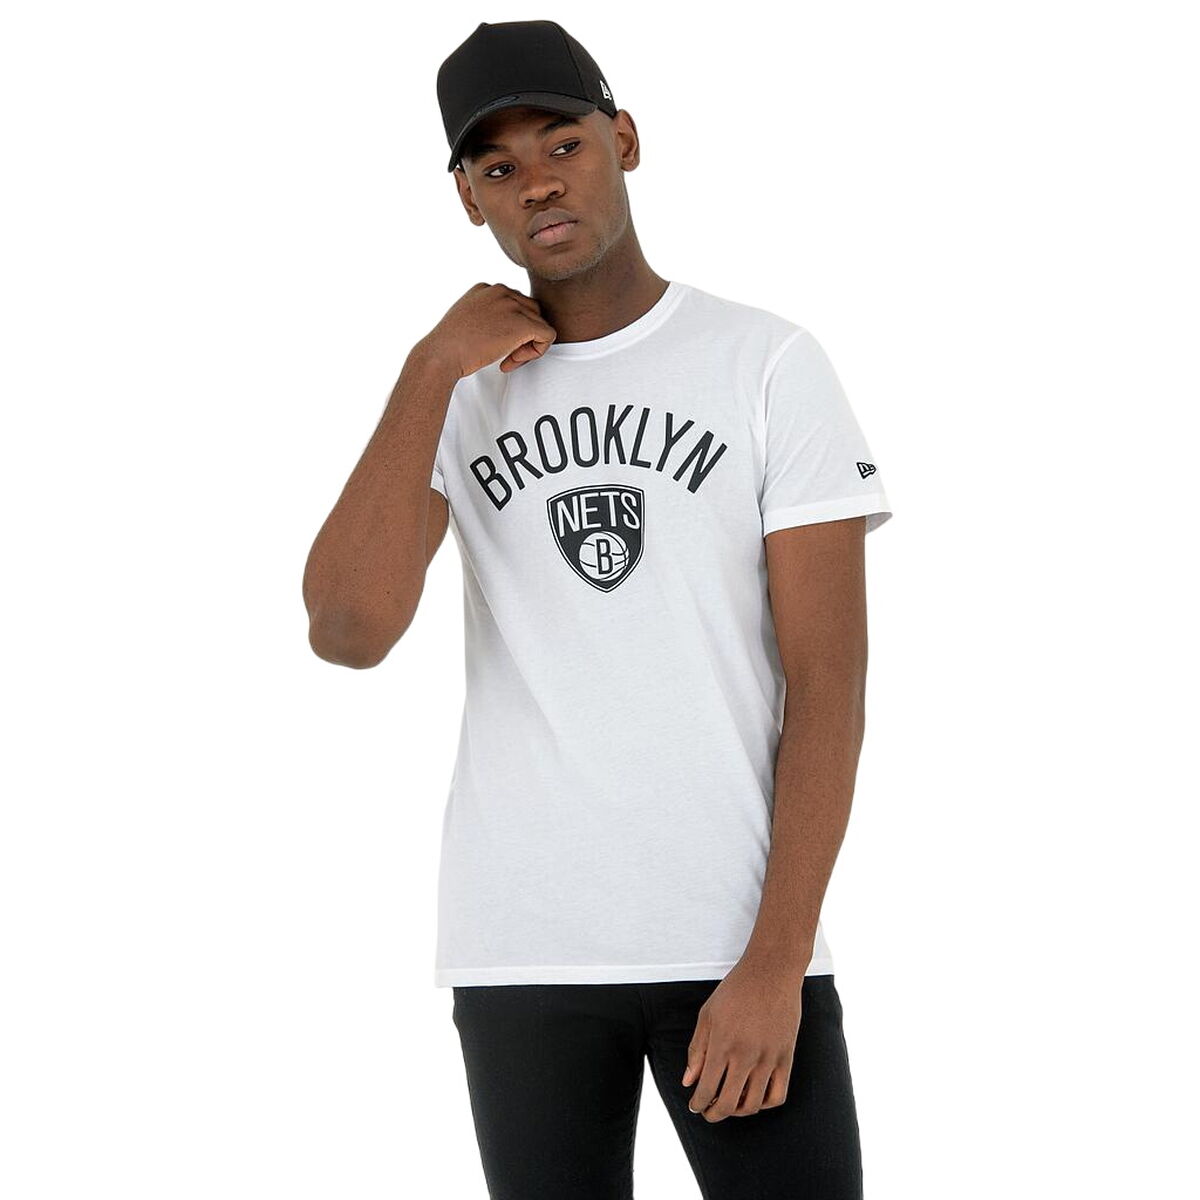 T-shirt à manches courtes homme New Era NOS NBA BRONET 60416753 Blanc